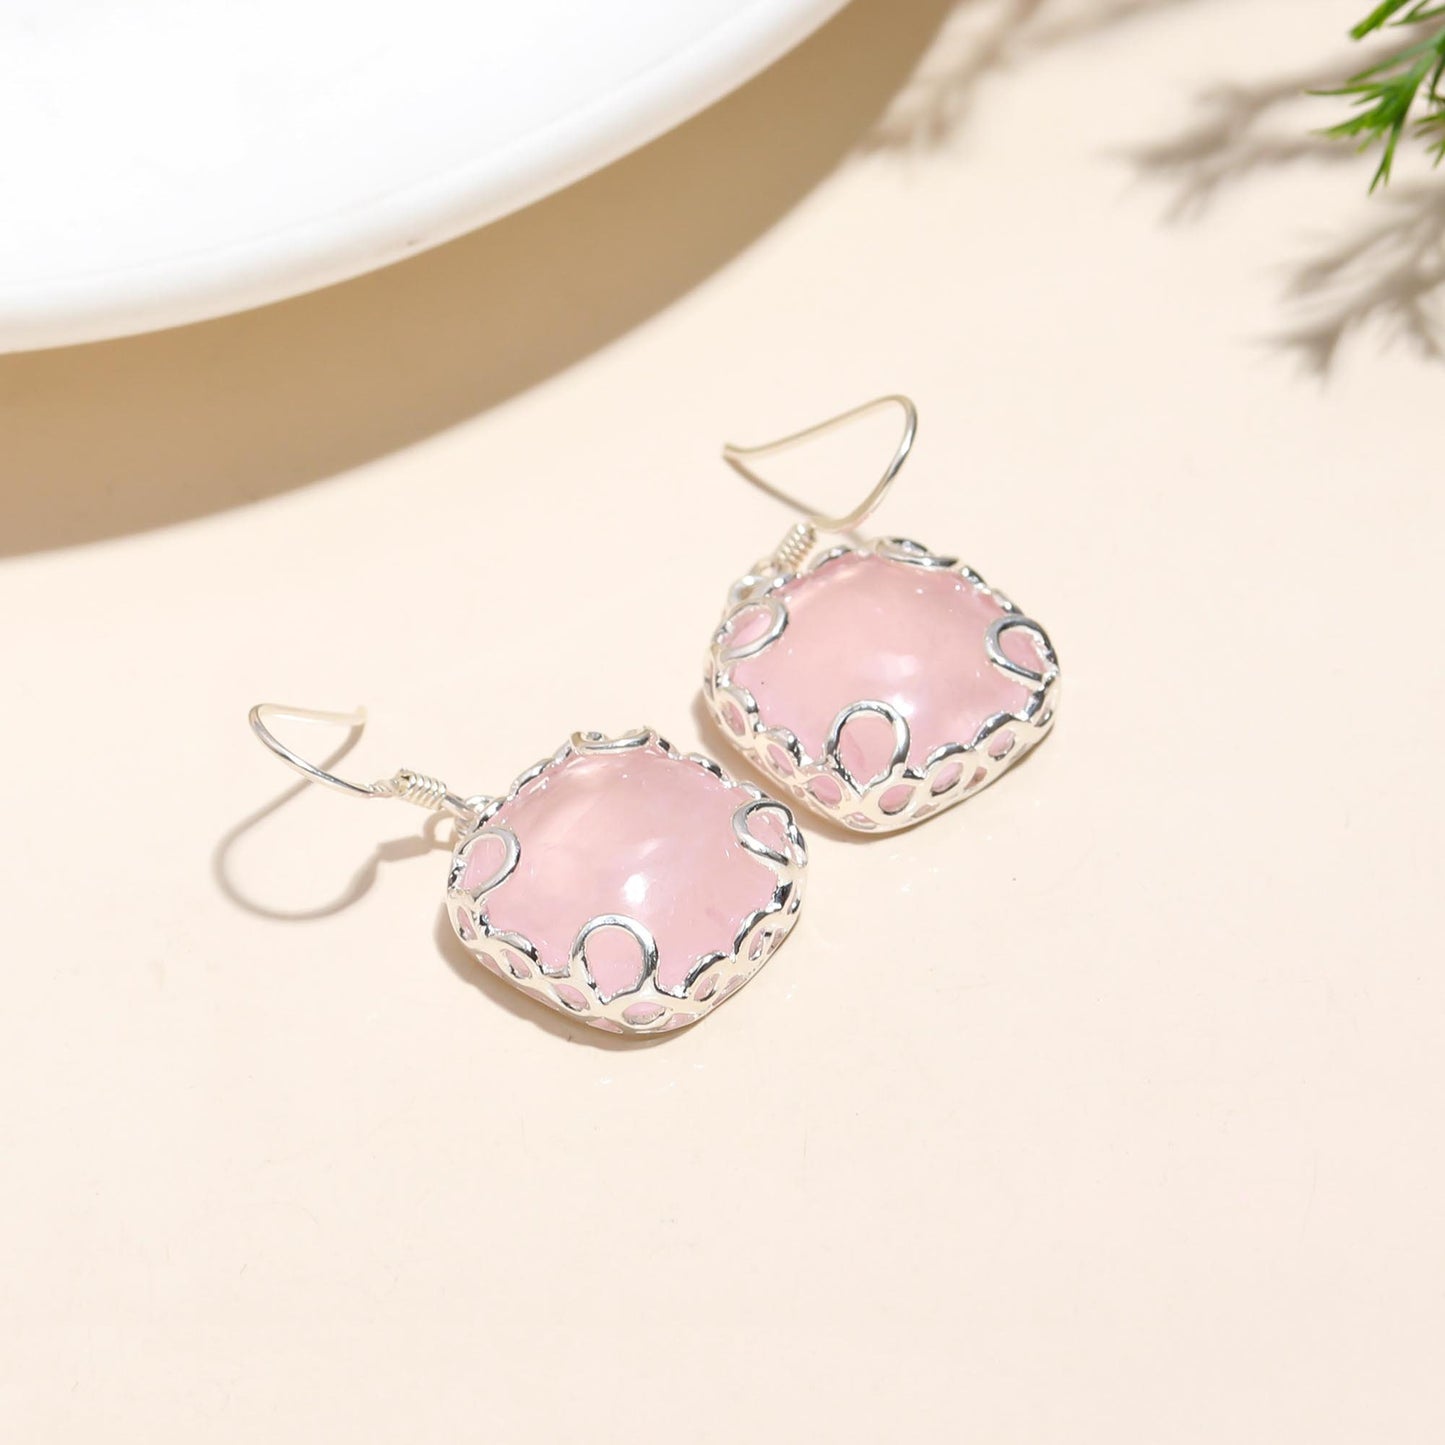 Pink Rose Quartz Earring in Dangle Earwire, Birthday, Anniversary, Women, Teenager Girls, Gift for her. Designer Solid 925 Sterling Silver